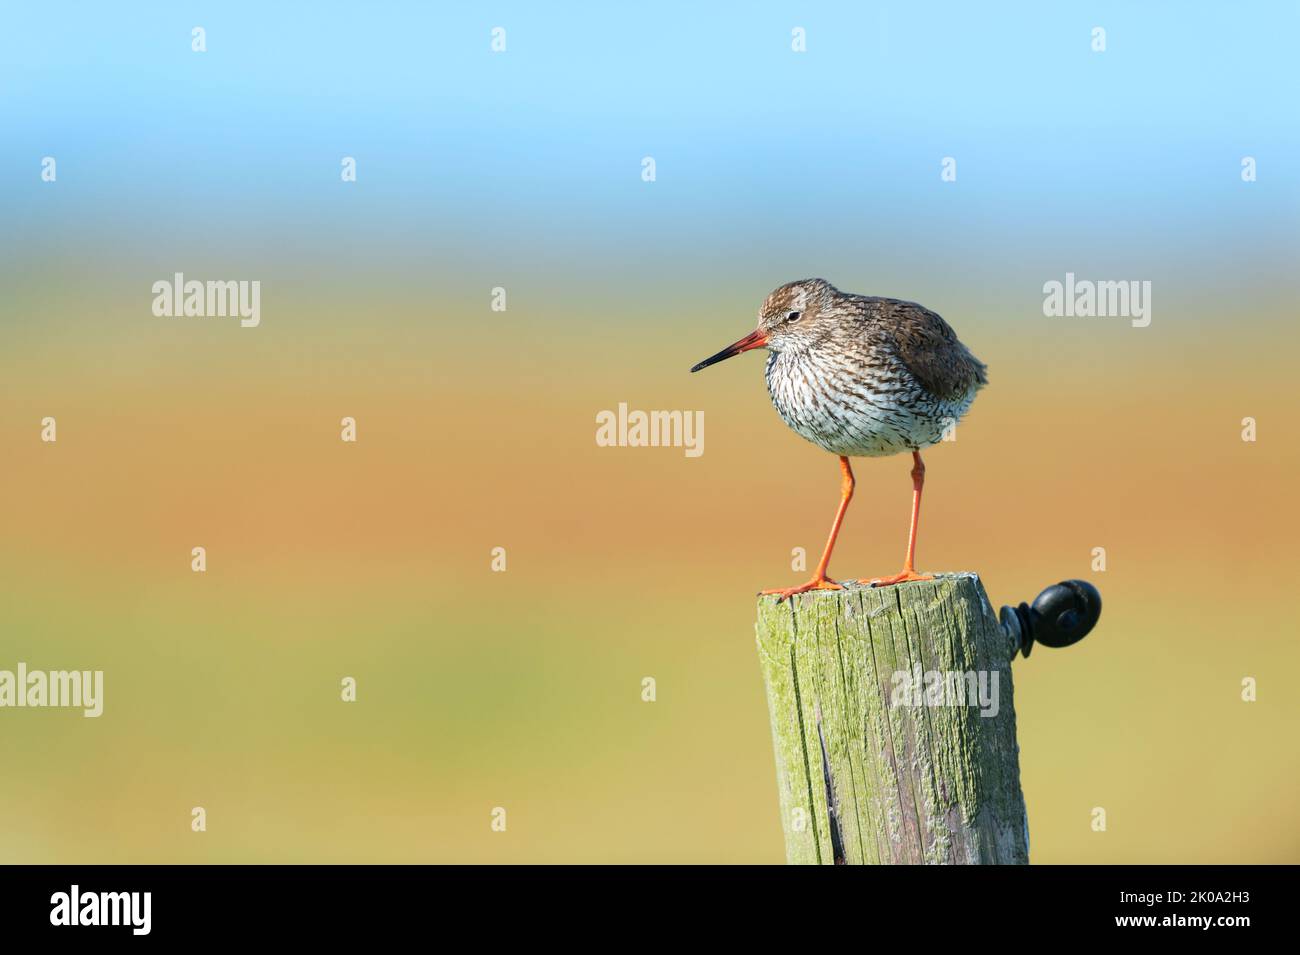 Common Redshank bird on pole Stock Photo